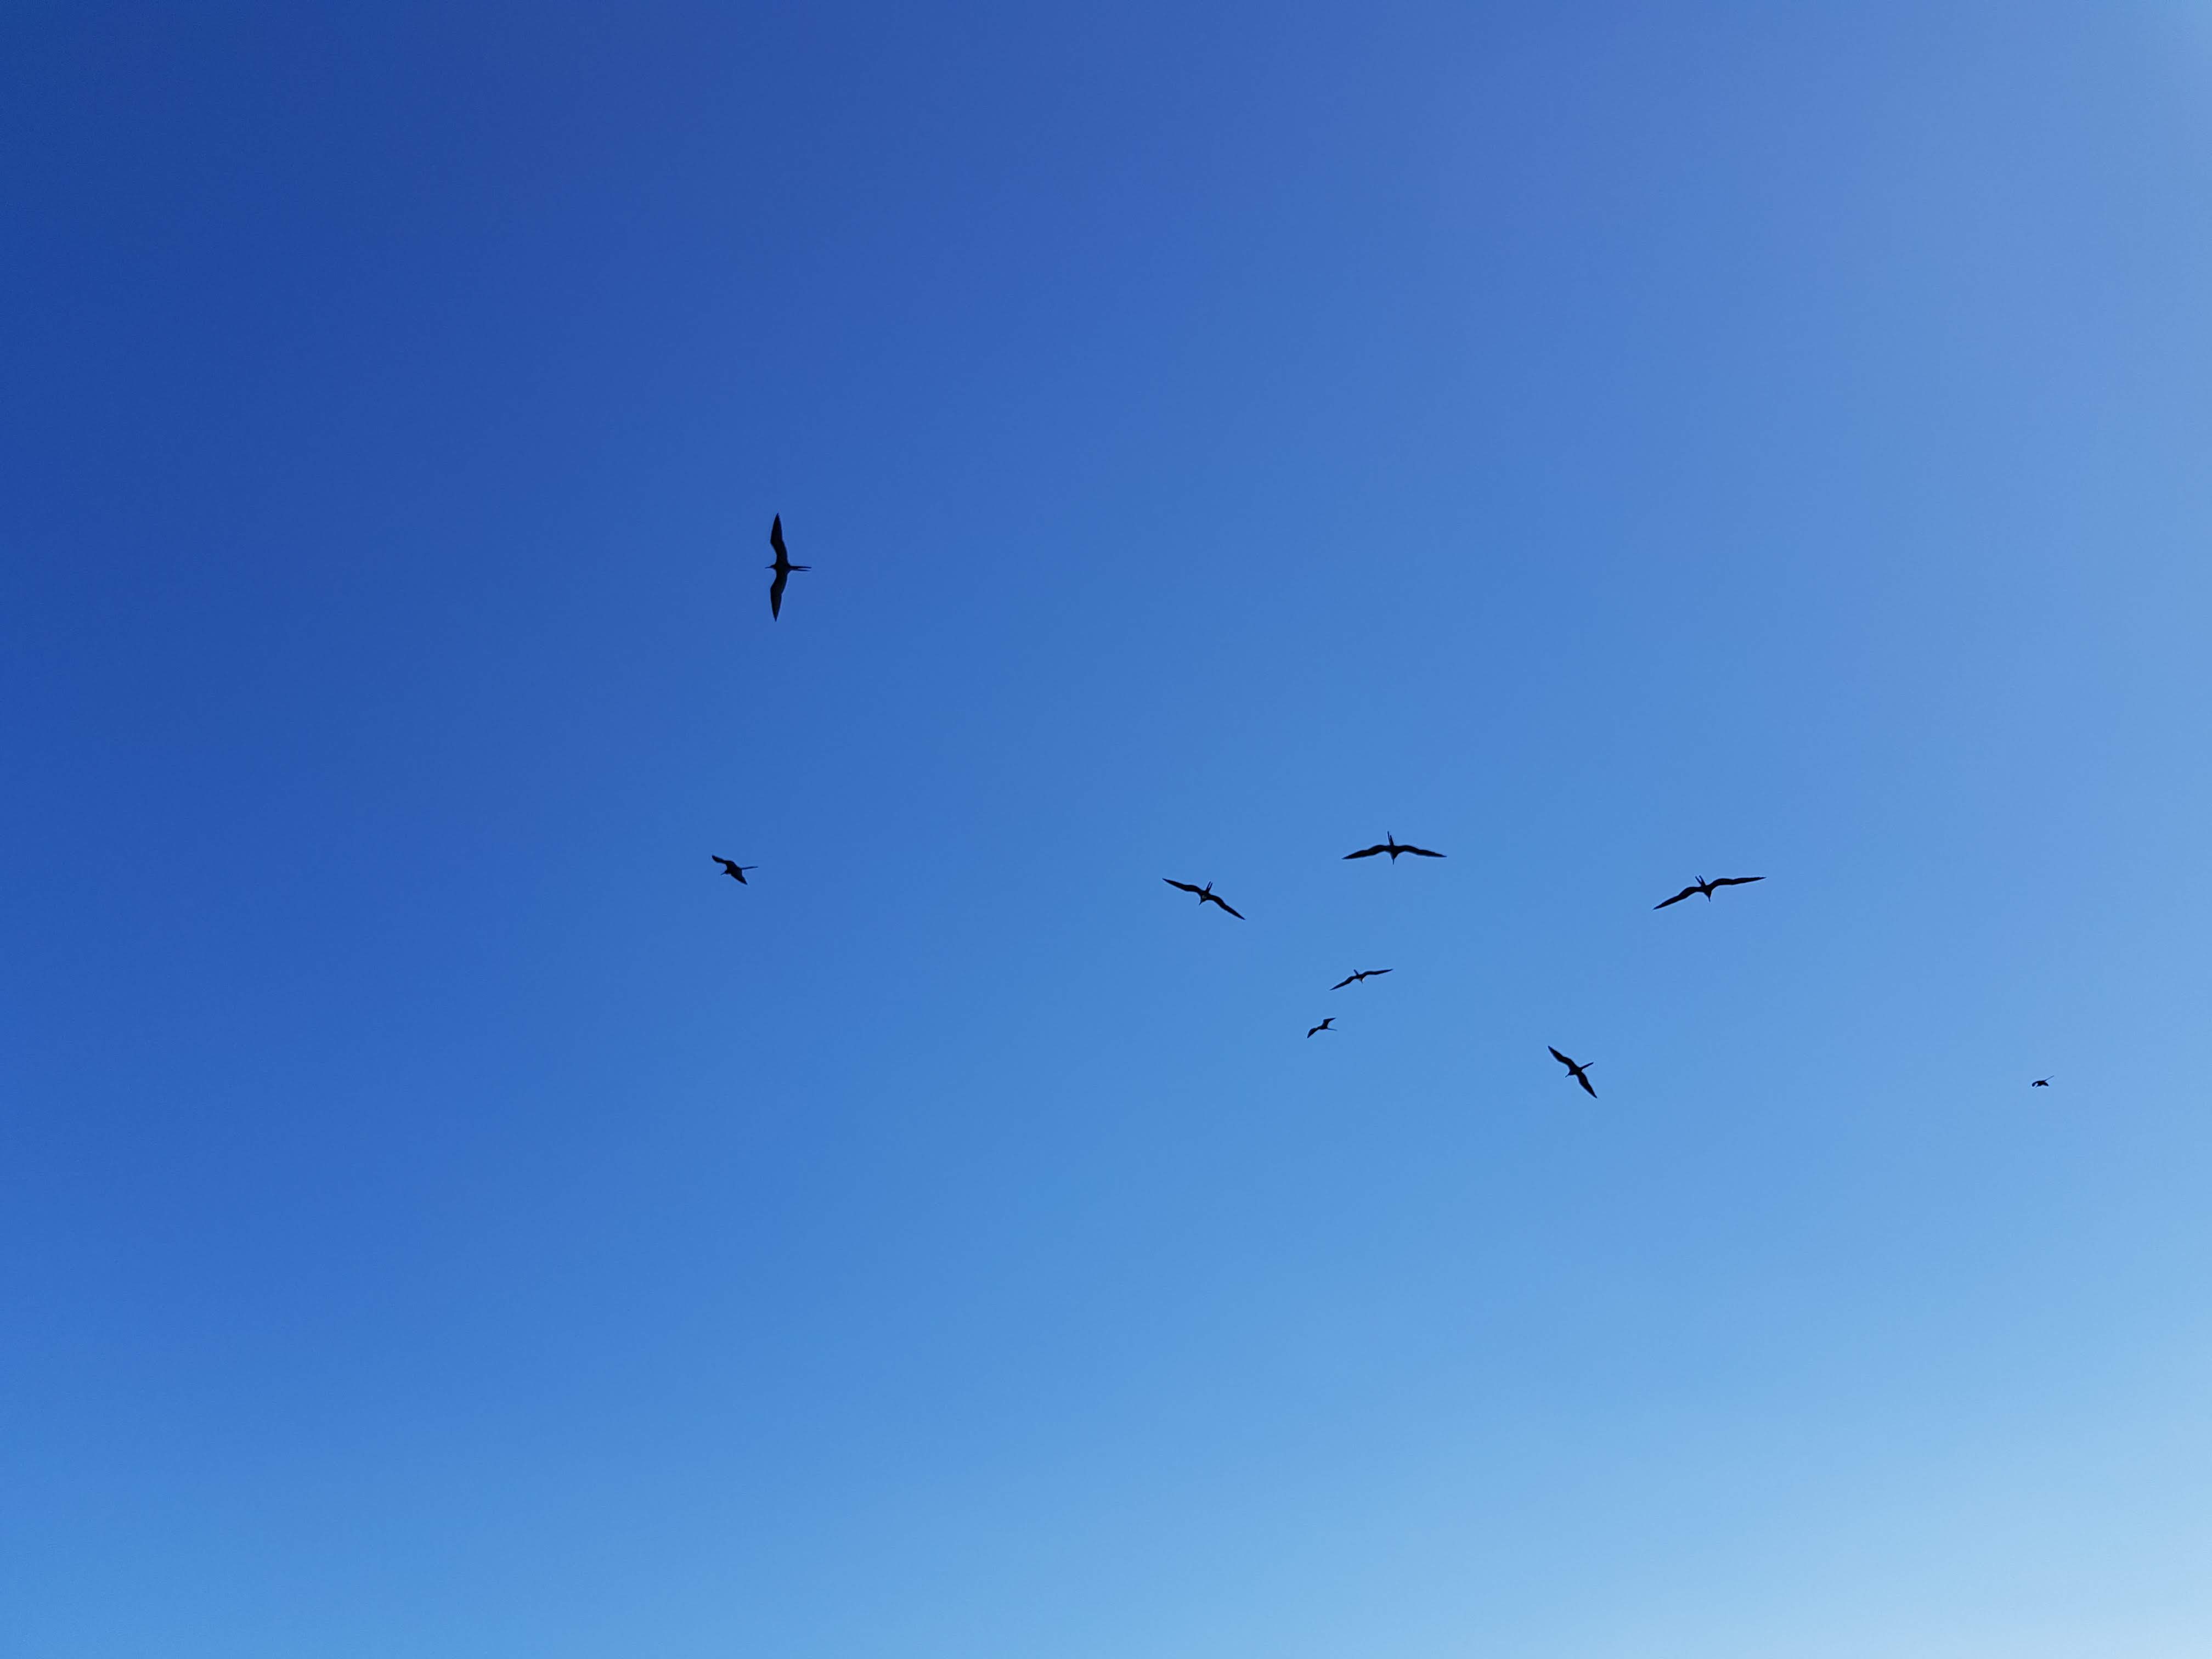 More flying birds